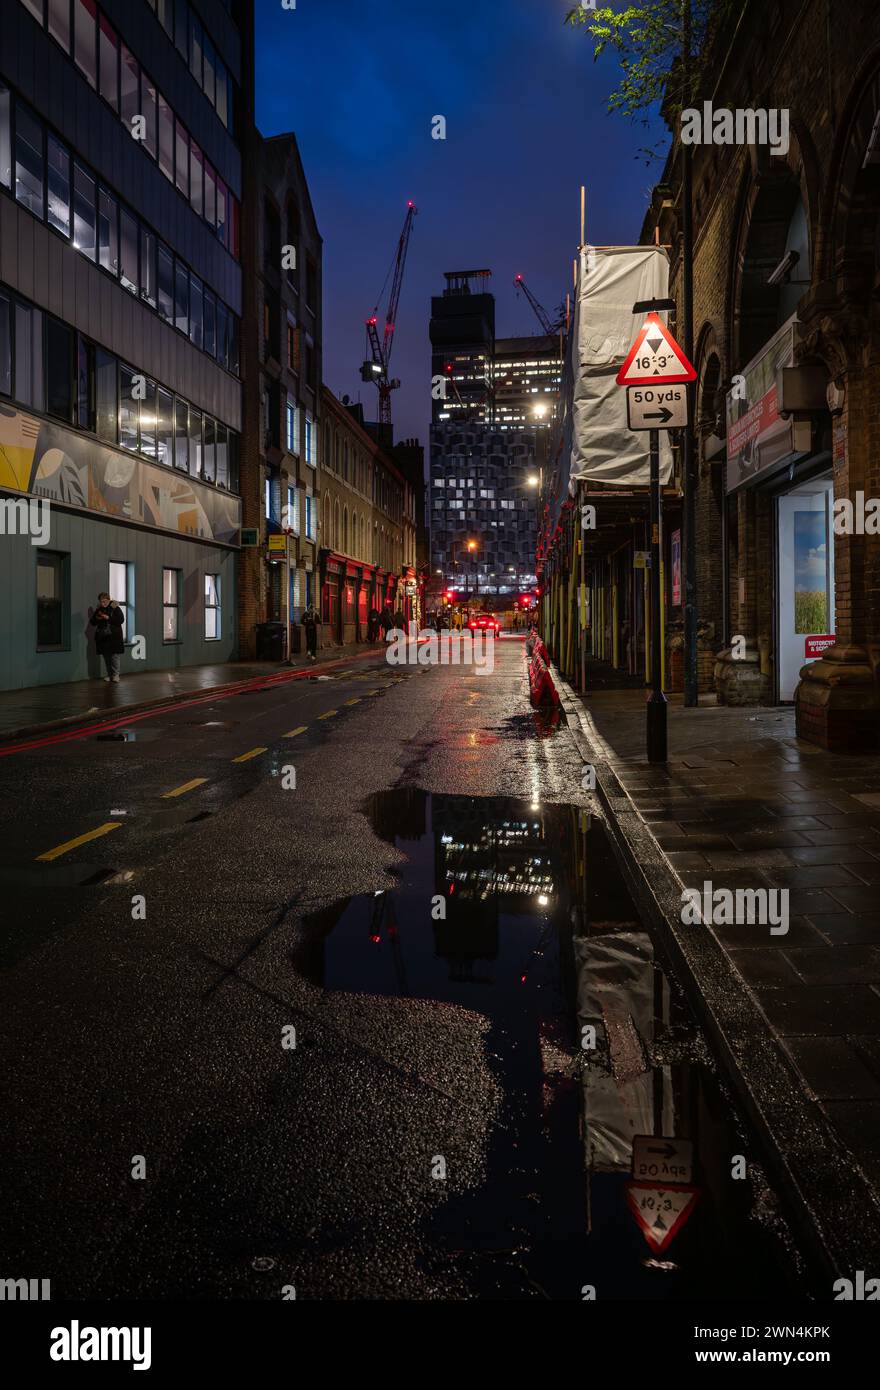 Bermondsey, London, UK: View along Crucifix Lane towards Guy's Hospital at night in the London borough of Southwark. Stock Photo